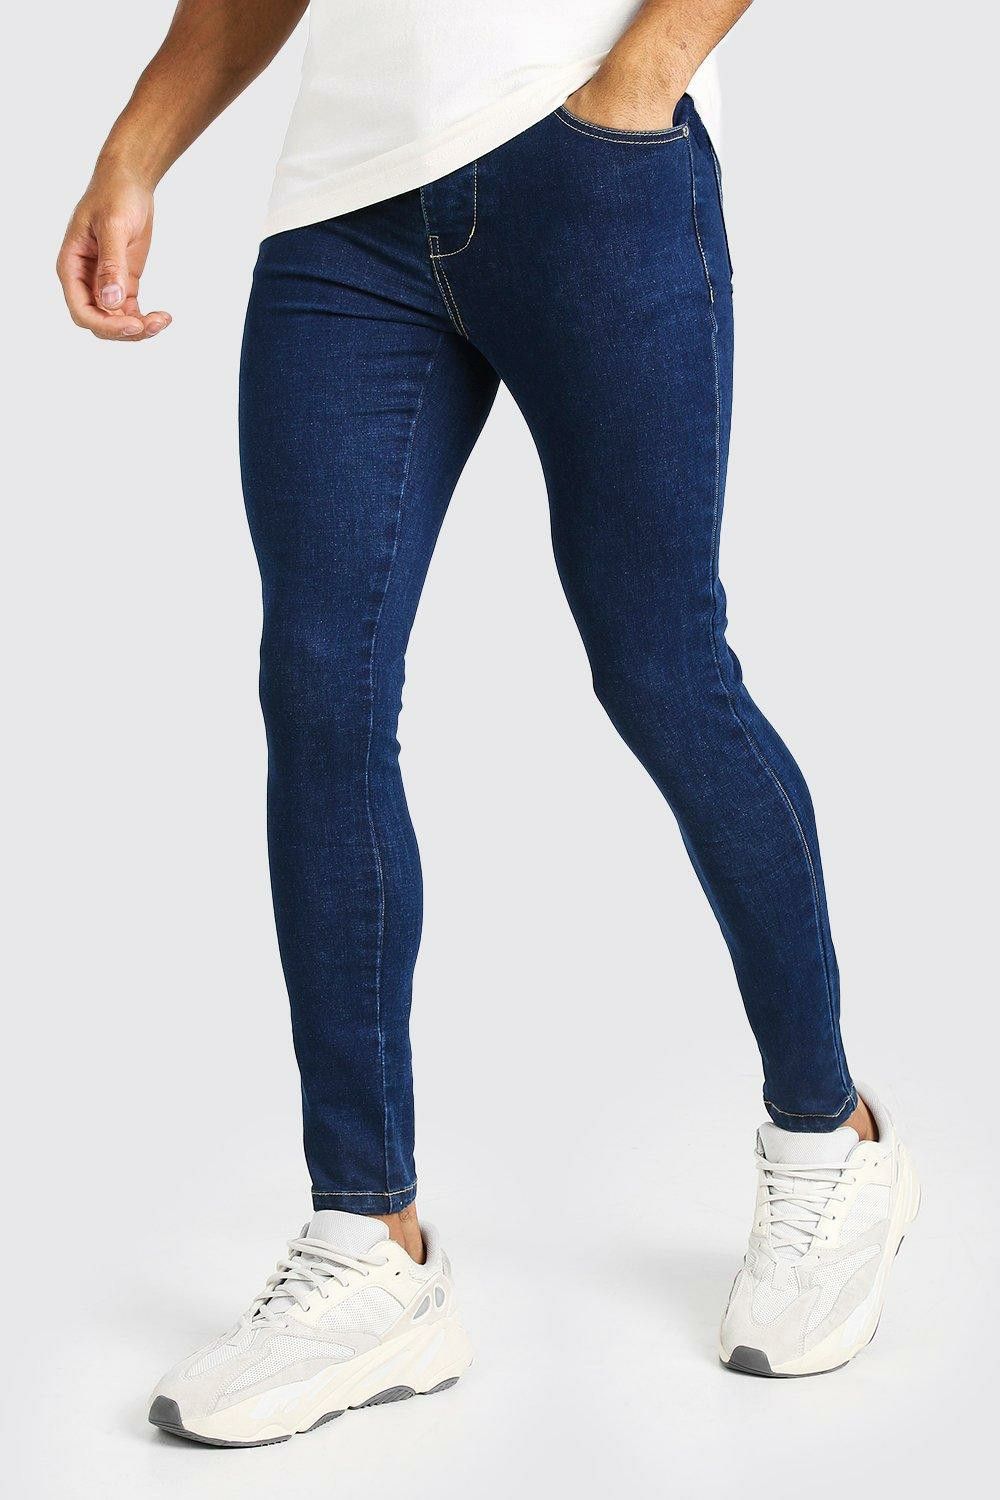 C0010|Skinny Dark Blue Jeans|Size: 32R